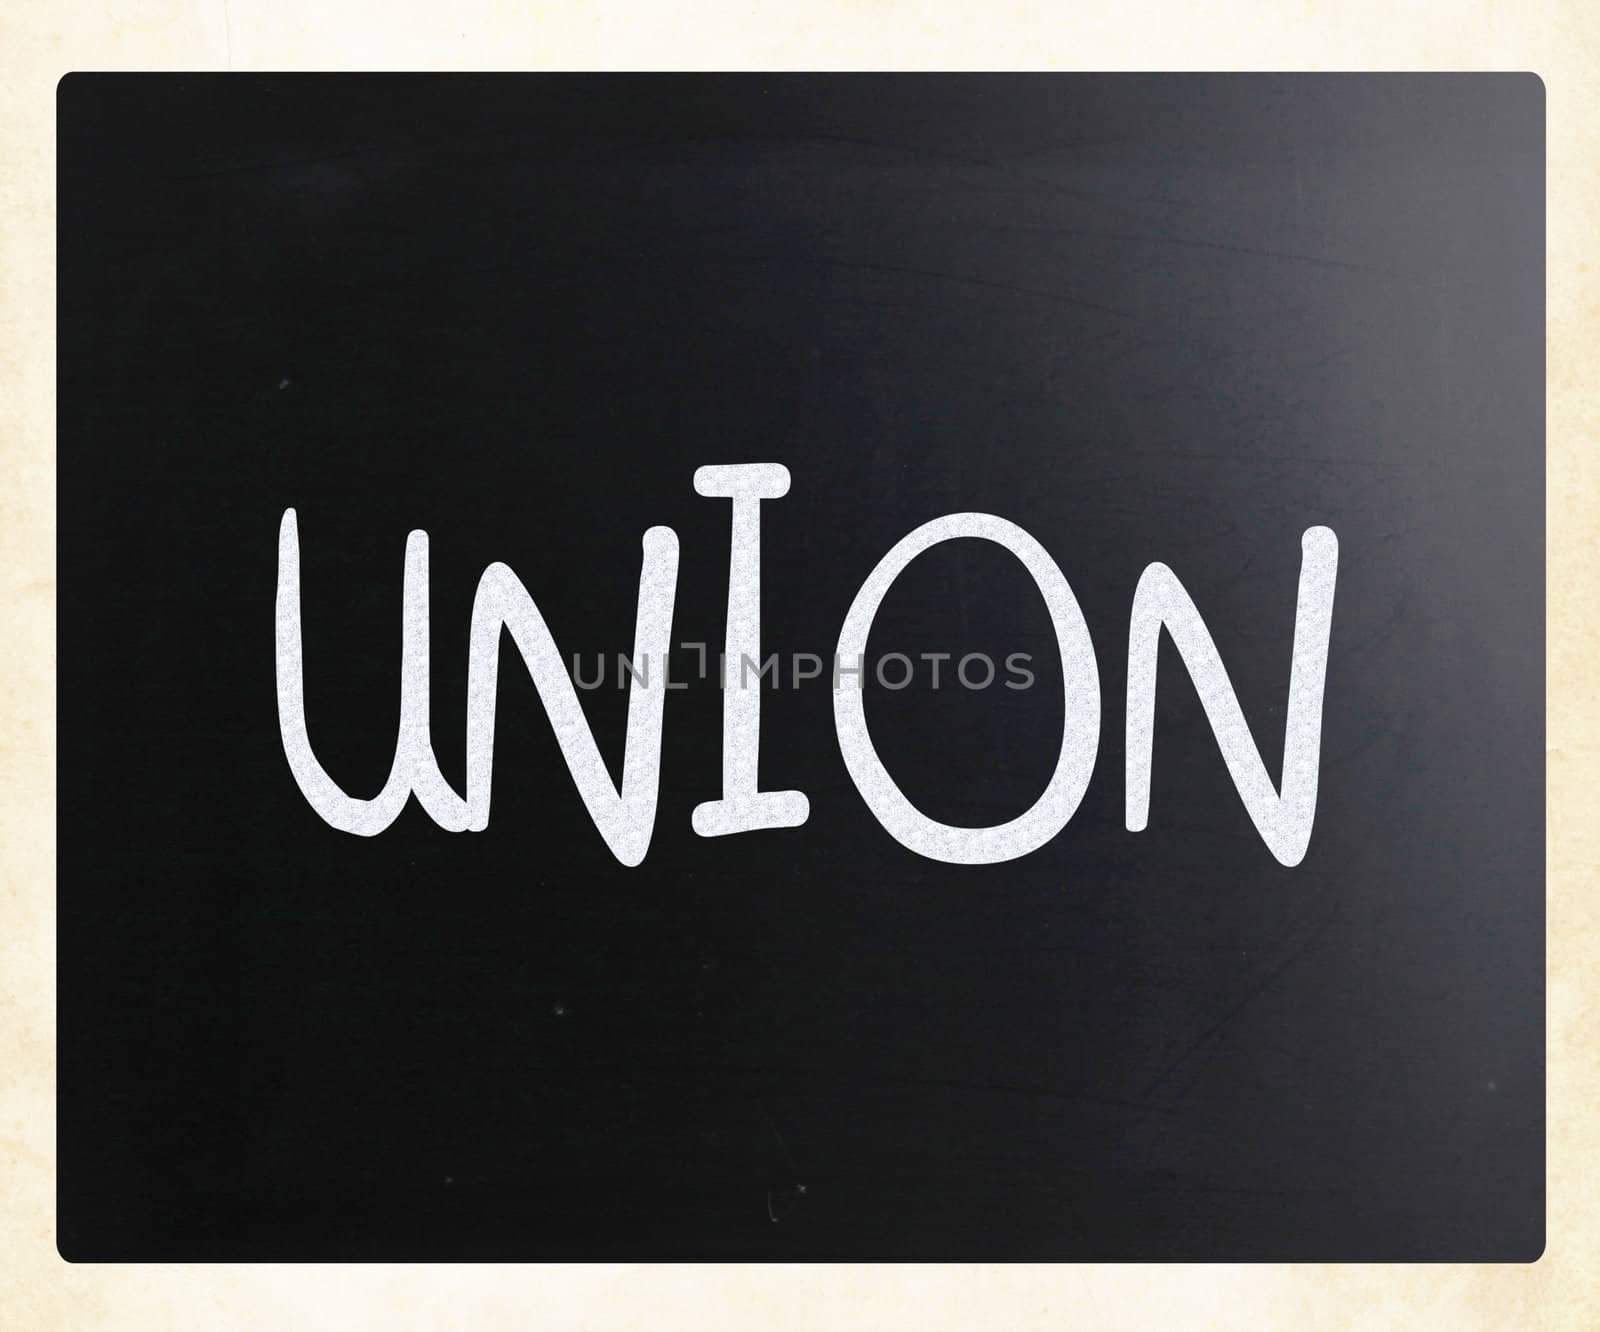 The word "Union" handwritten with white chalk on a blackboard